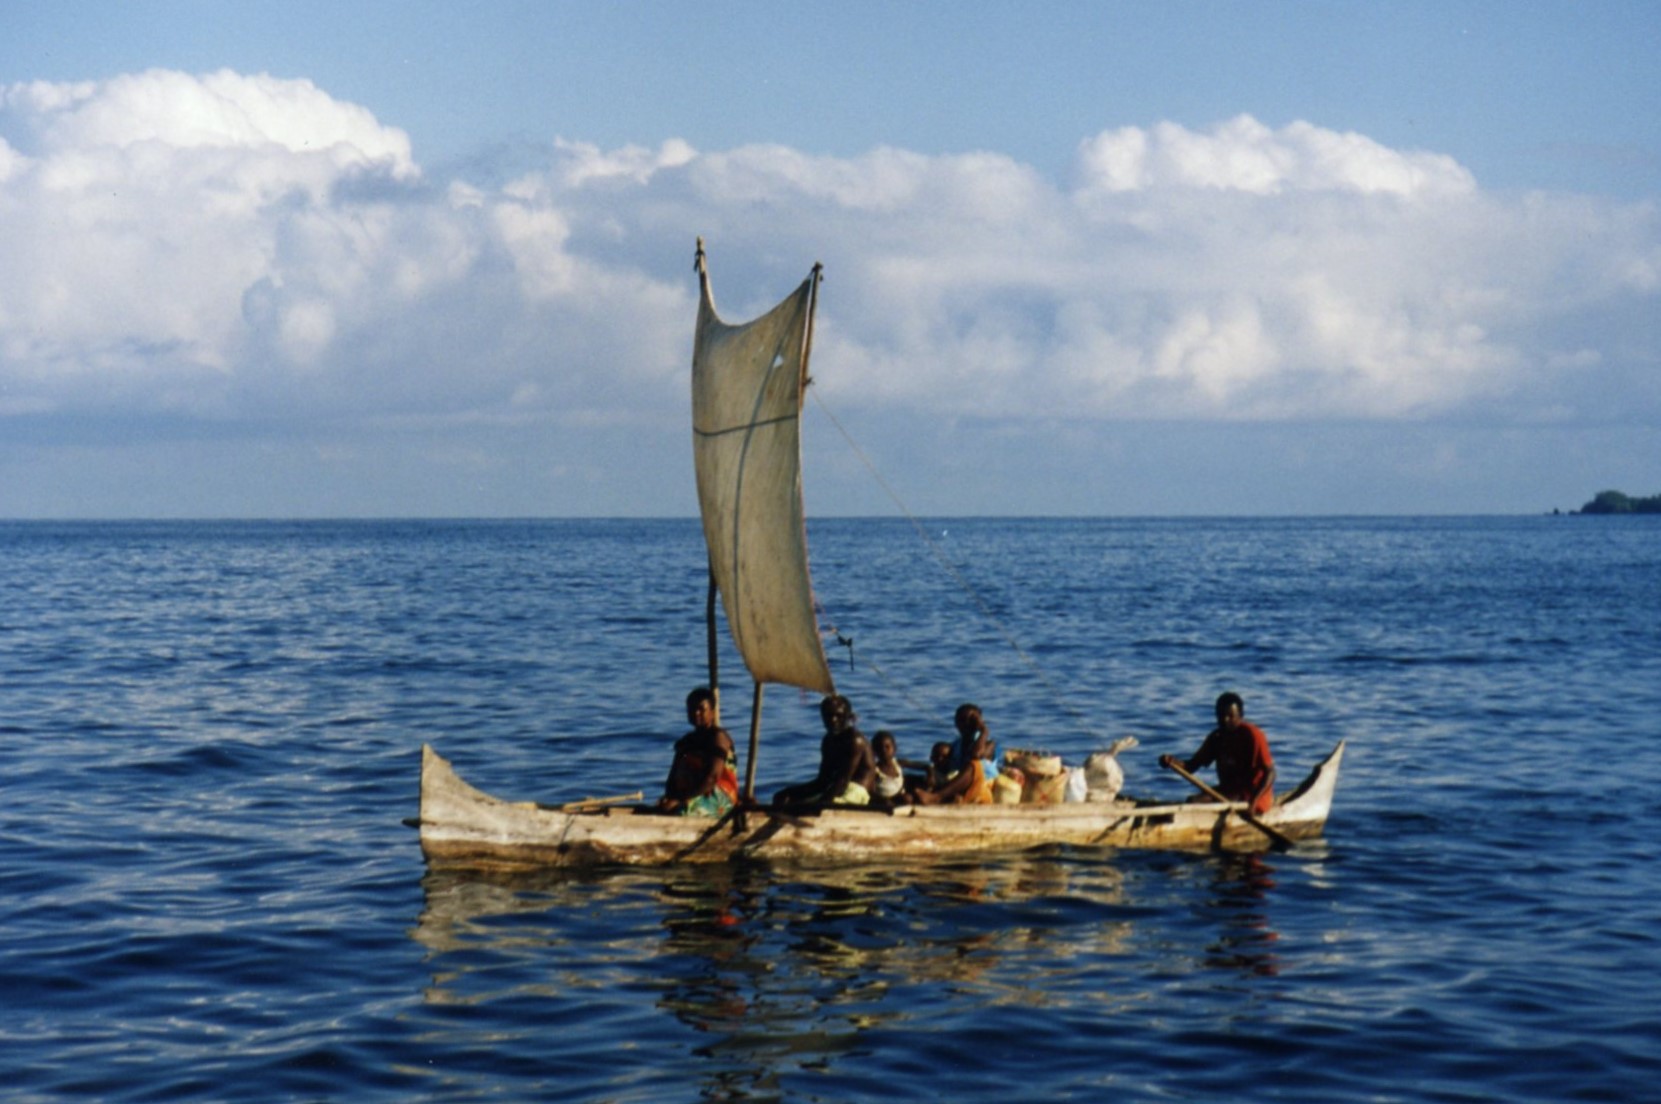 Pirogue with sail, Madagascar